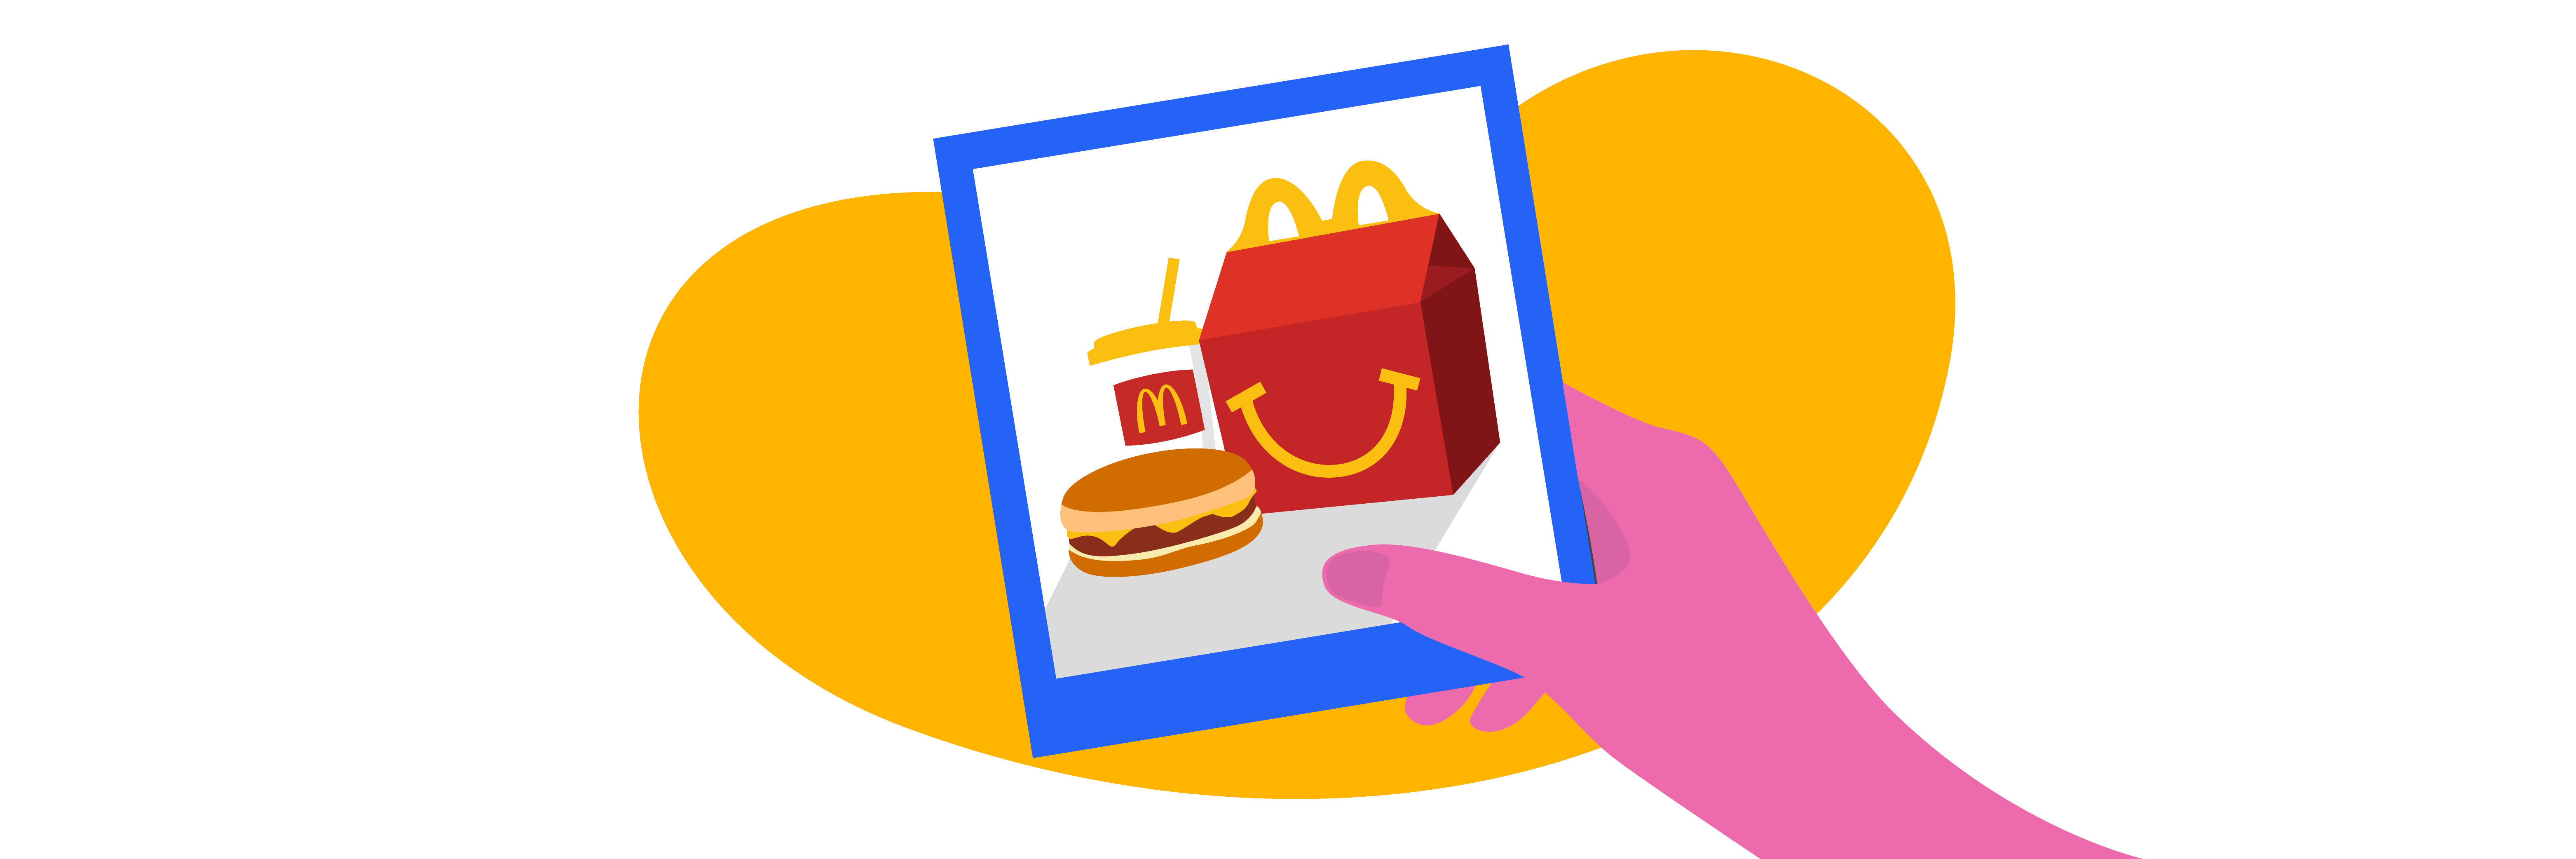 Sideways 6 - Examples of Intrapreneurship - McDonalds Happy Meal